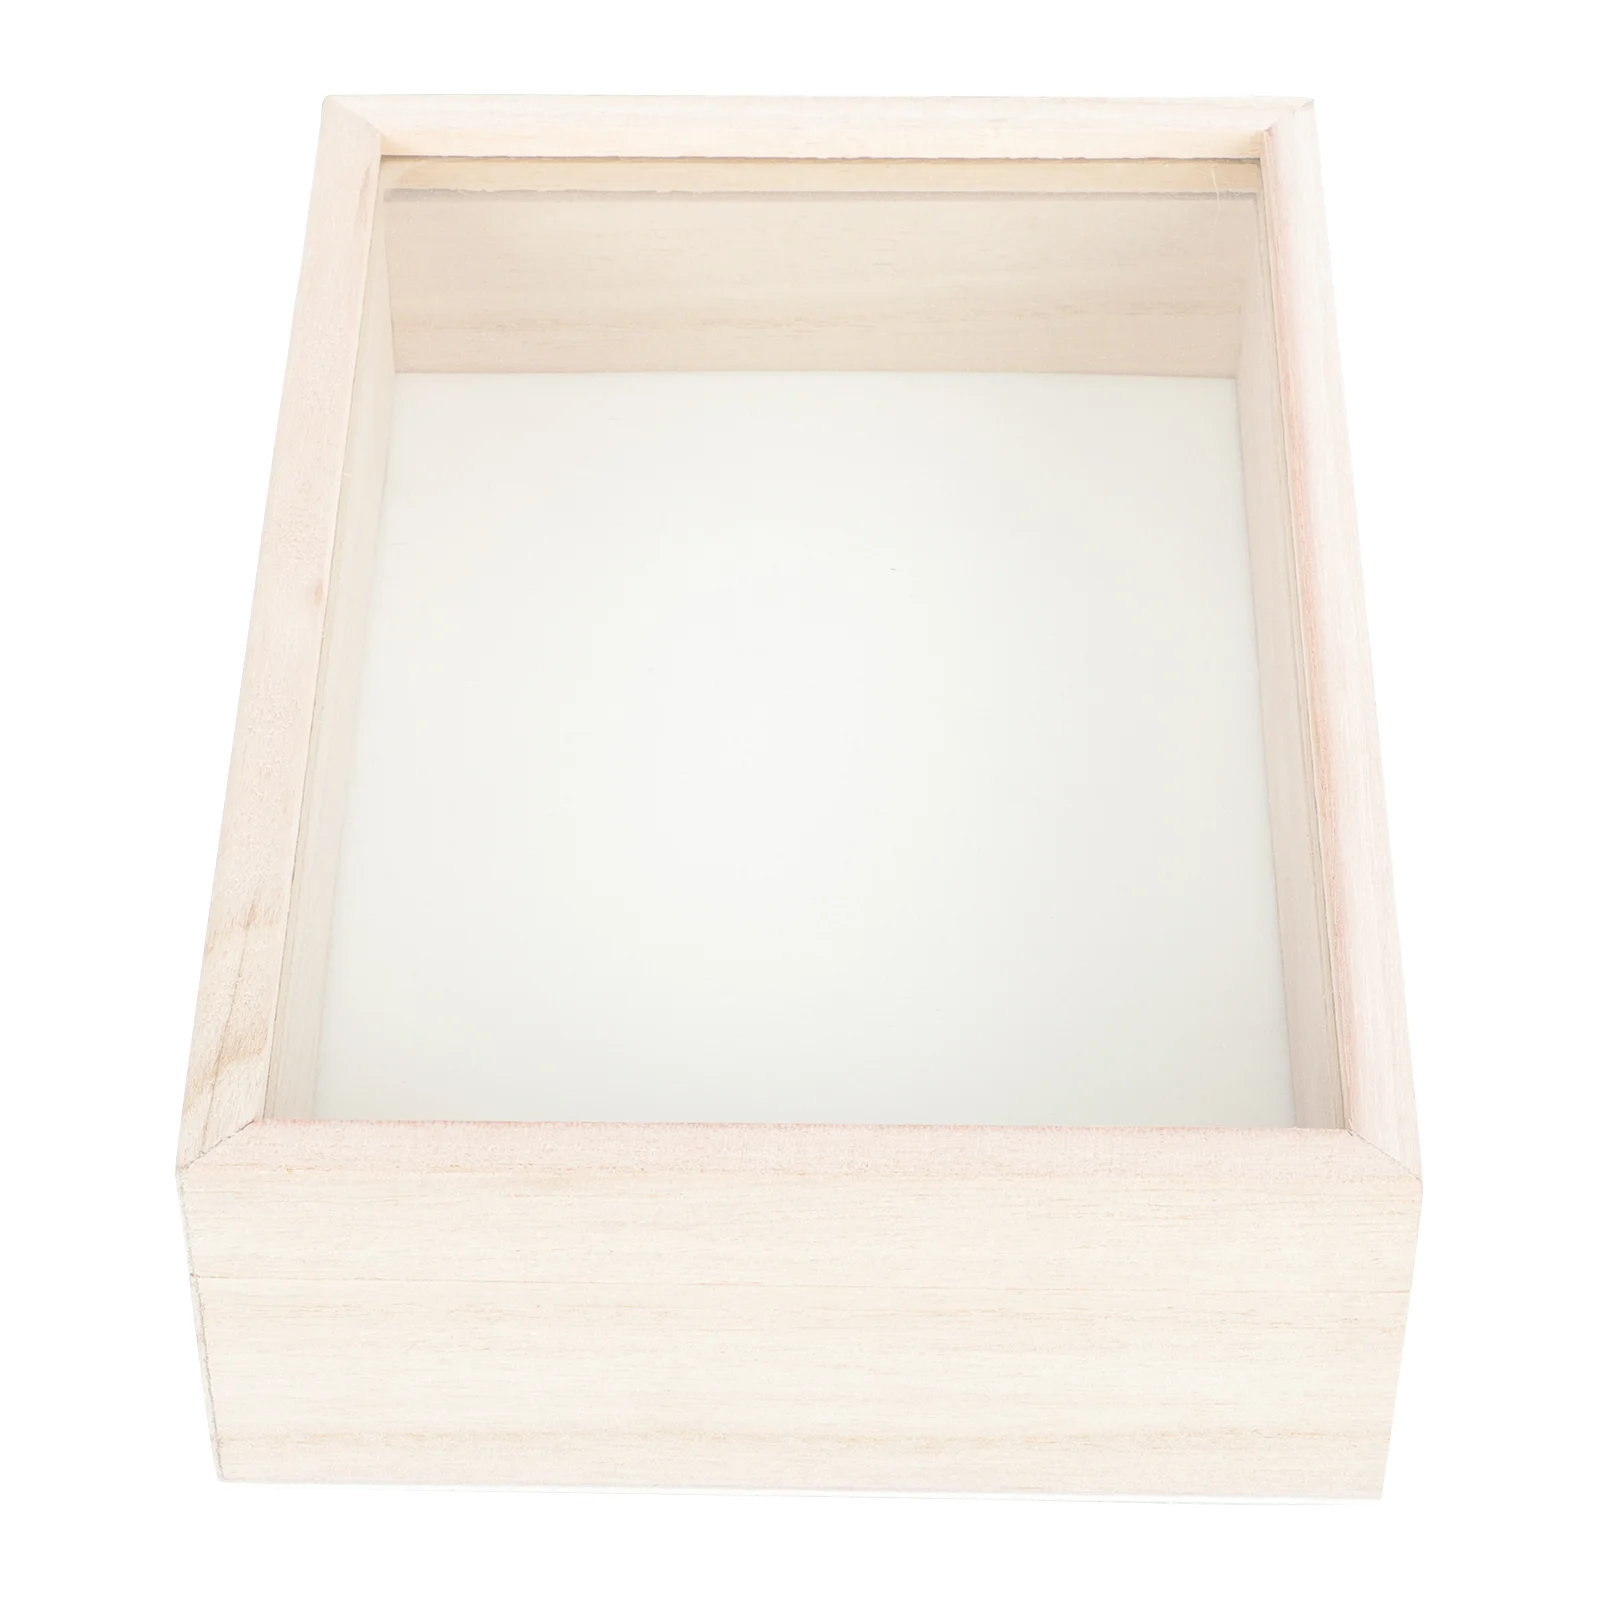 1PC Holz Probe Box Einfache Lagerung Box Probe Display Box Fall für Hause